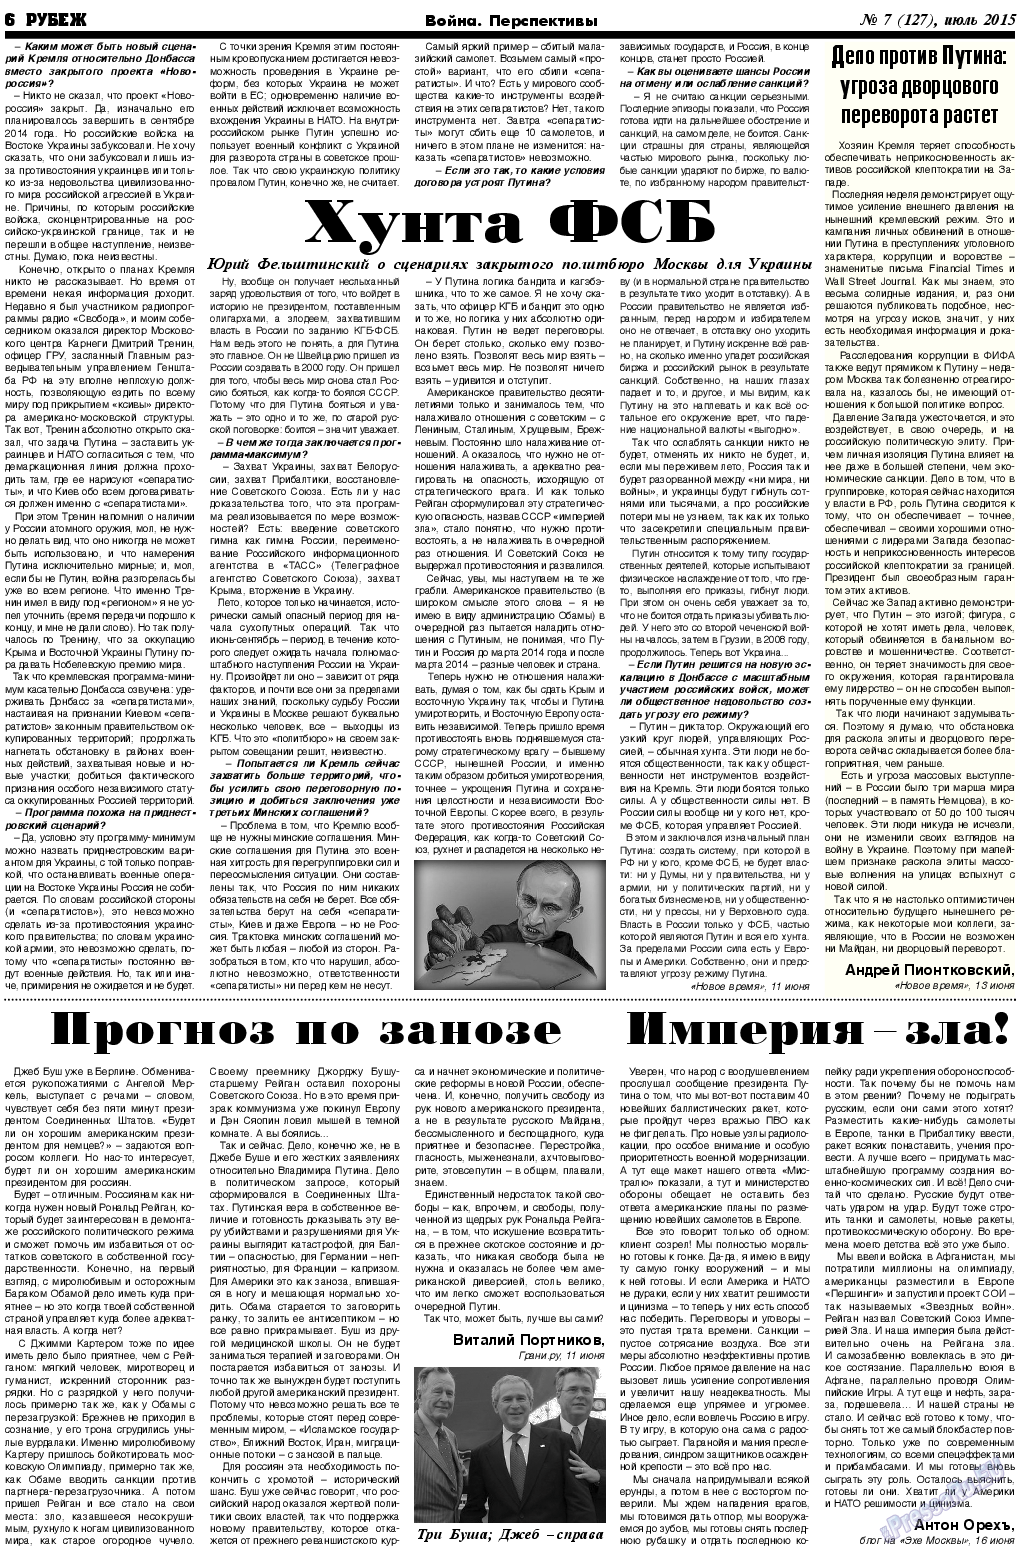 Рубеж, газета. 2015 №7 стр.6